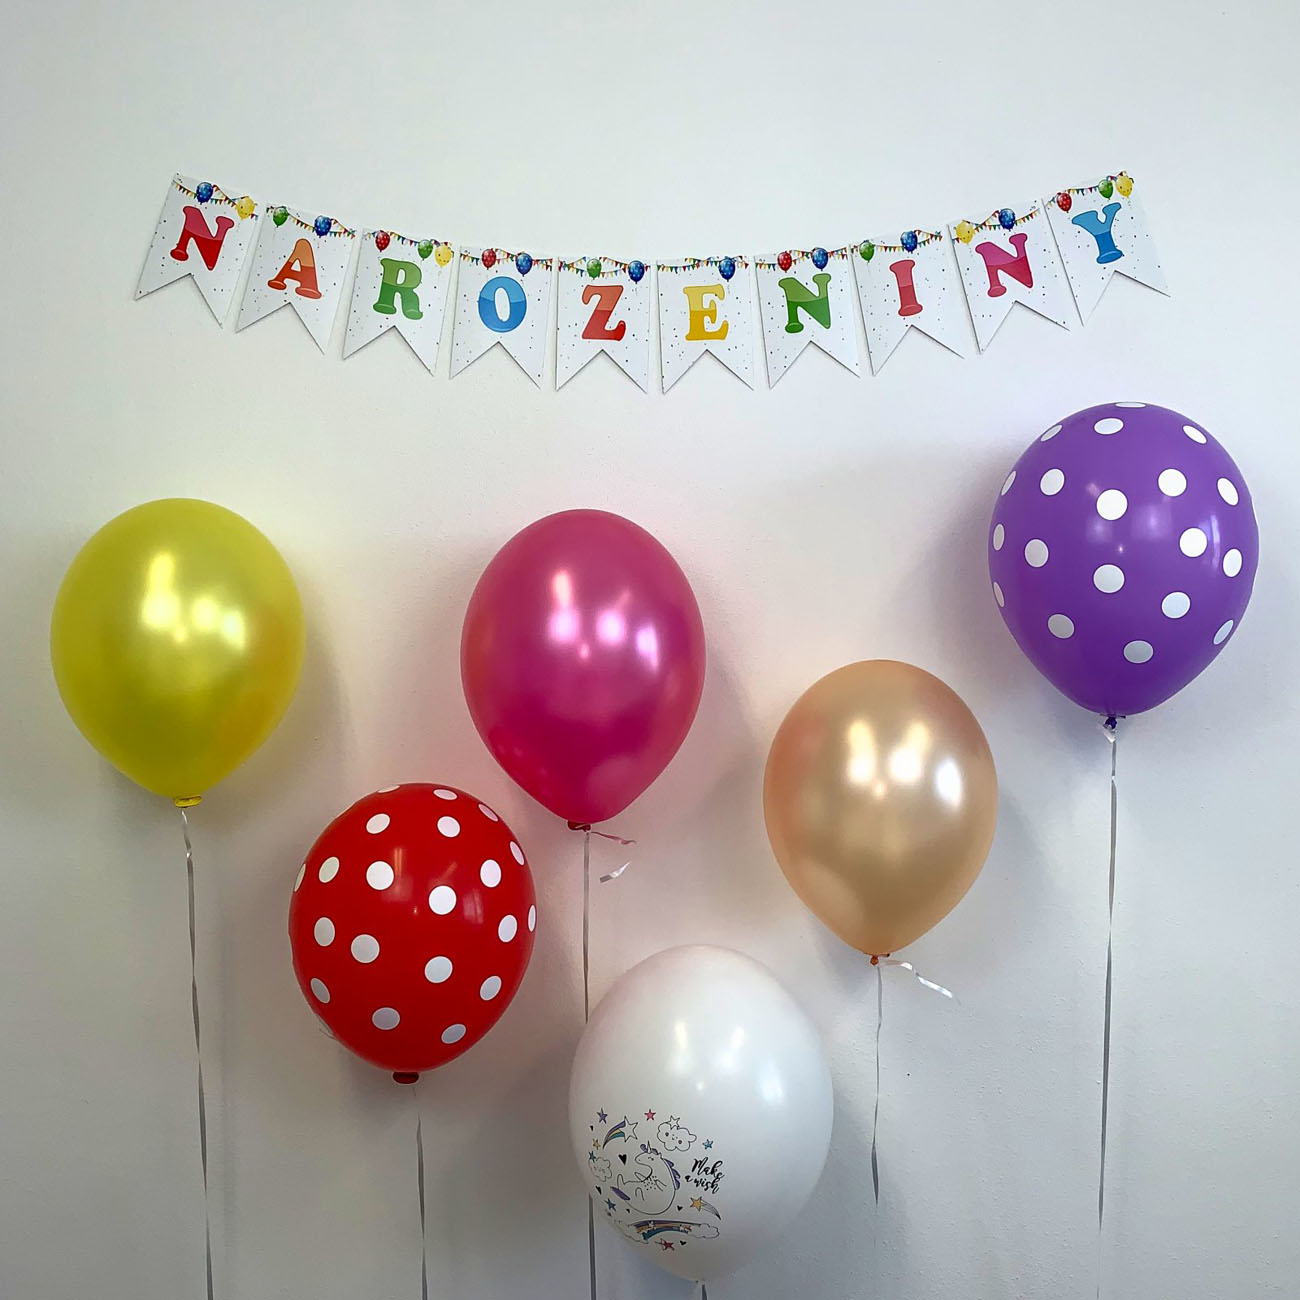 Party girlanda - Narozeniny - vlajky - GR5064